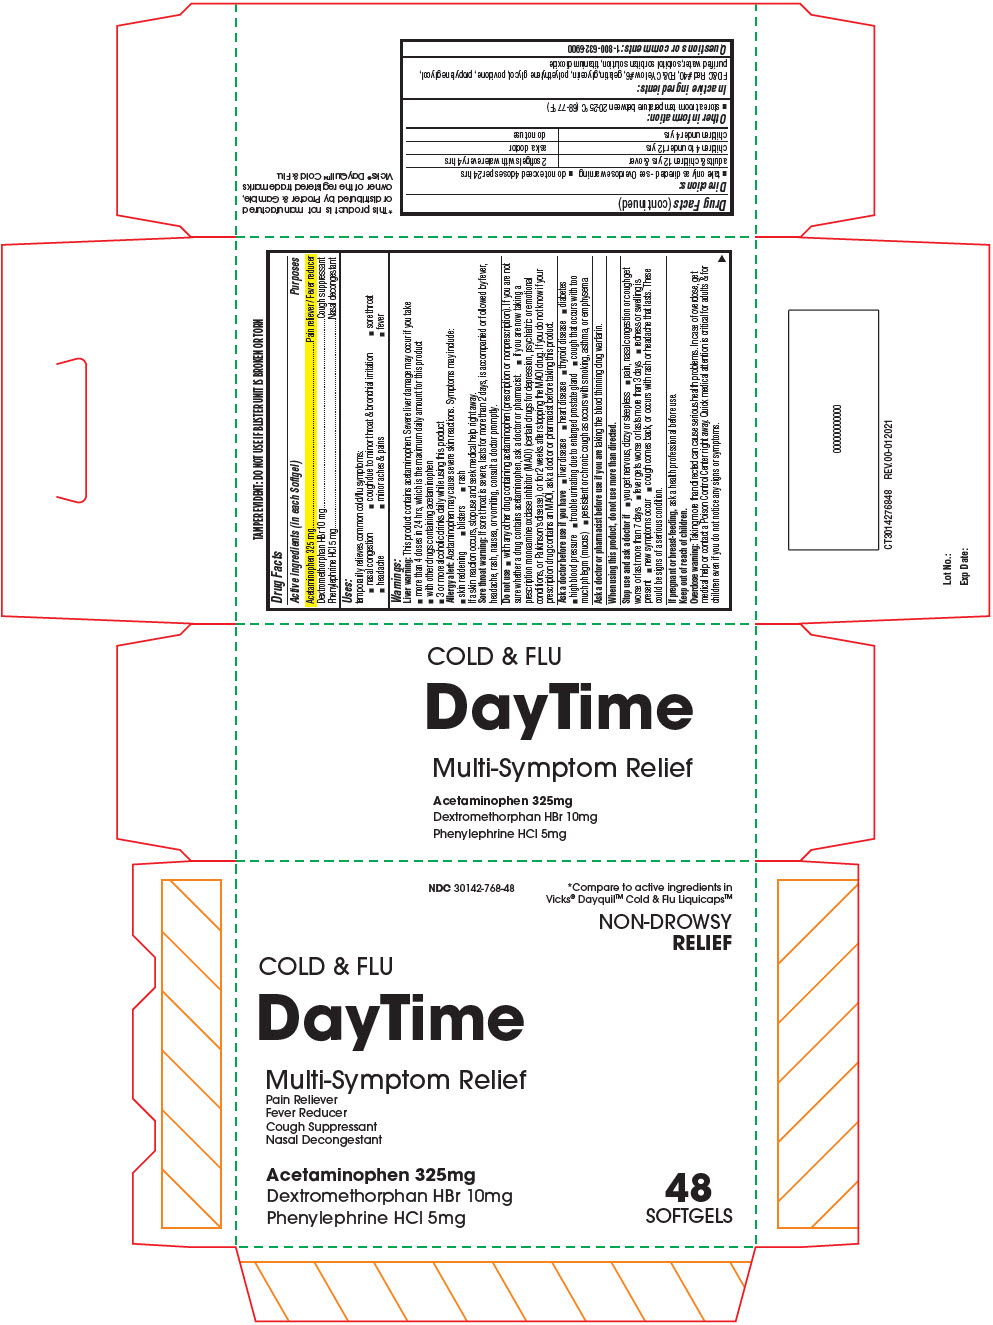 PRINCIPAL DISPLAY PANEL - 48 Softgel Blister Pack Carton